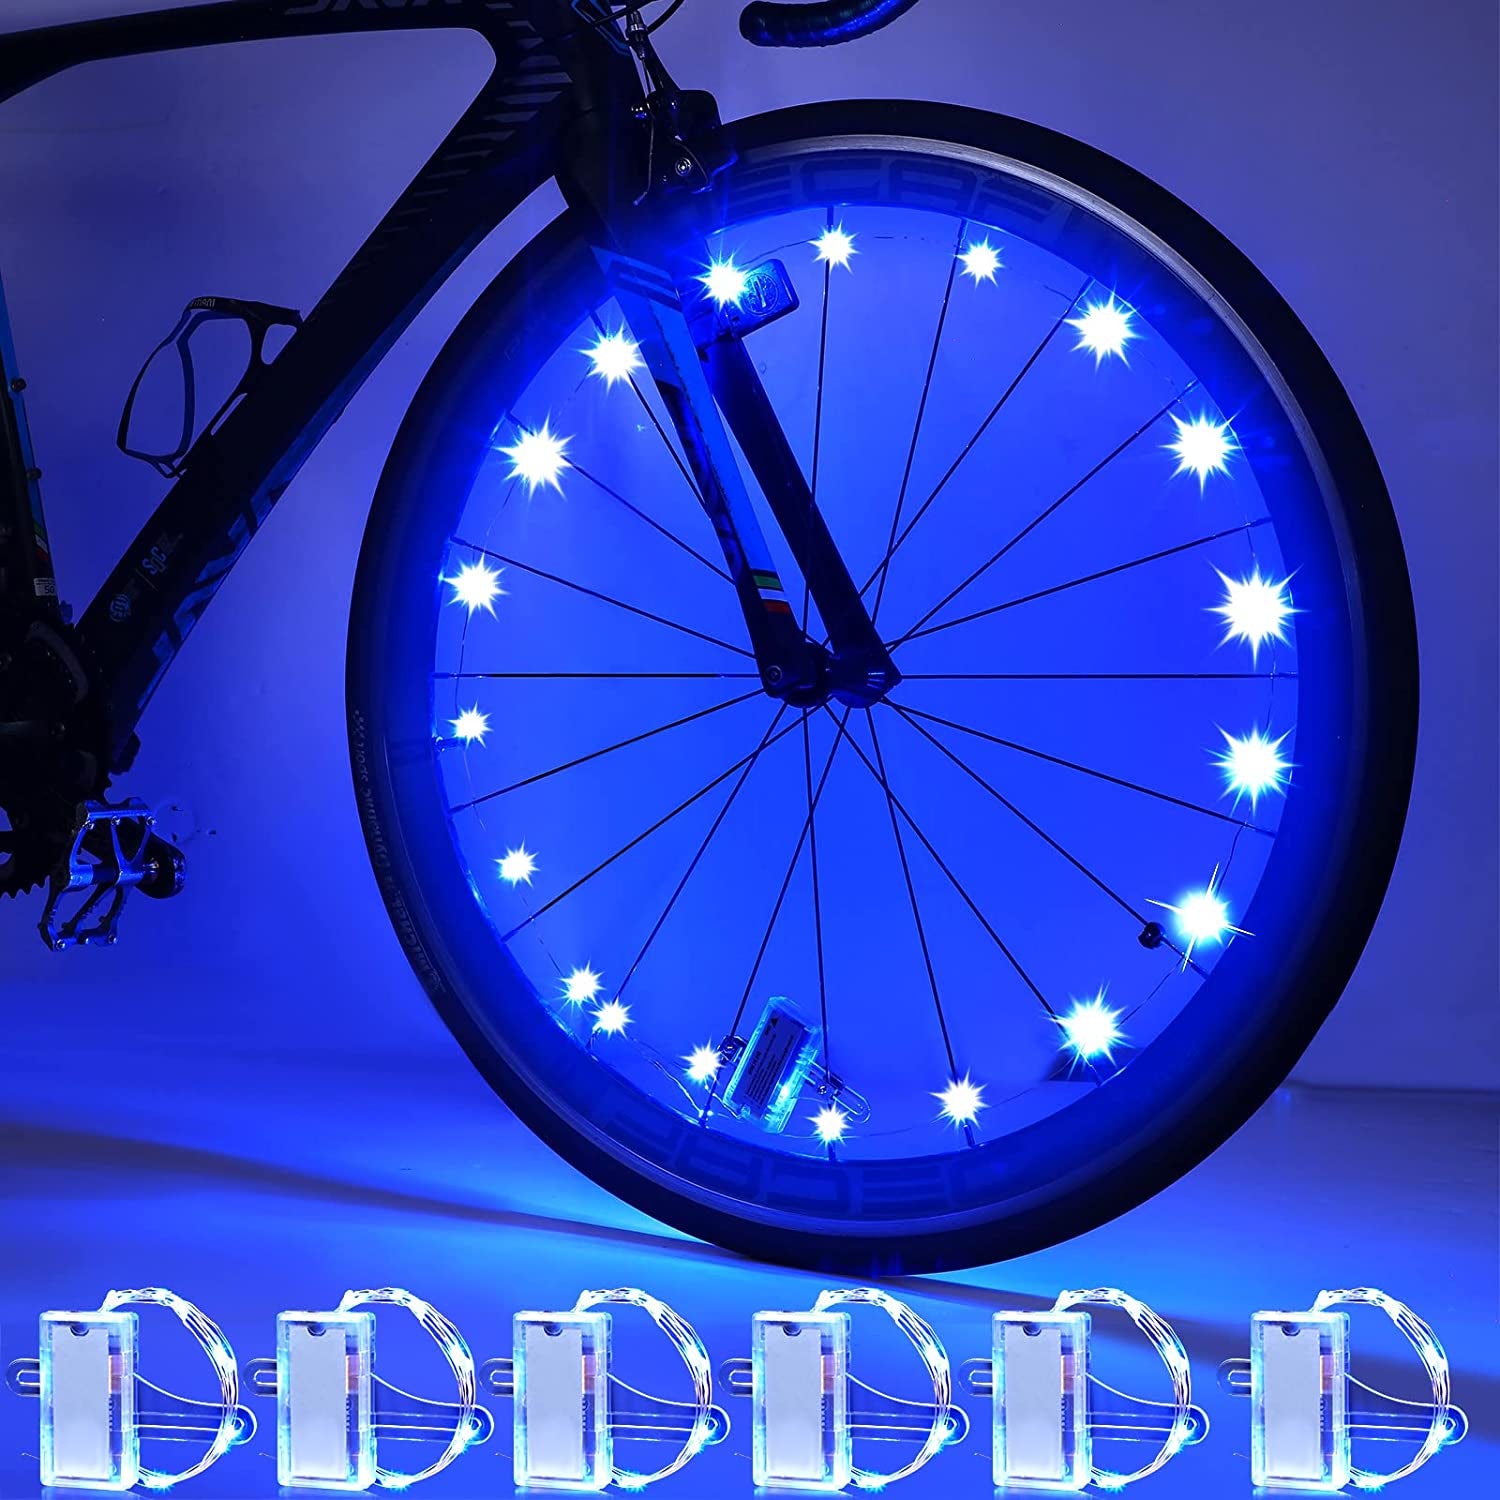  6 Pcs Tire Pack LED Bike Lights for Wheel Bicycle Spoke Lights Bright Blue Waterproof Bike Lights for Night Riding